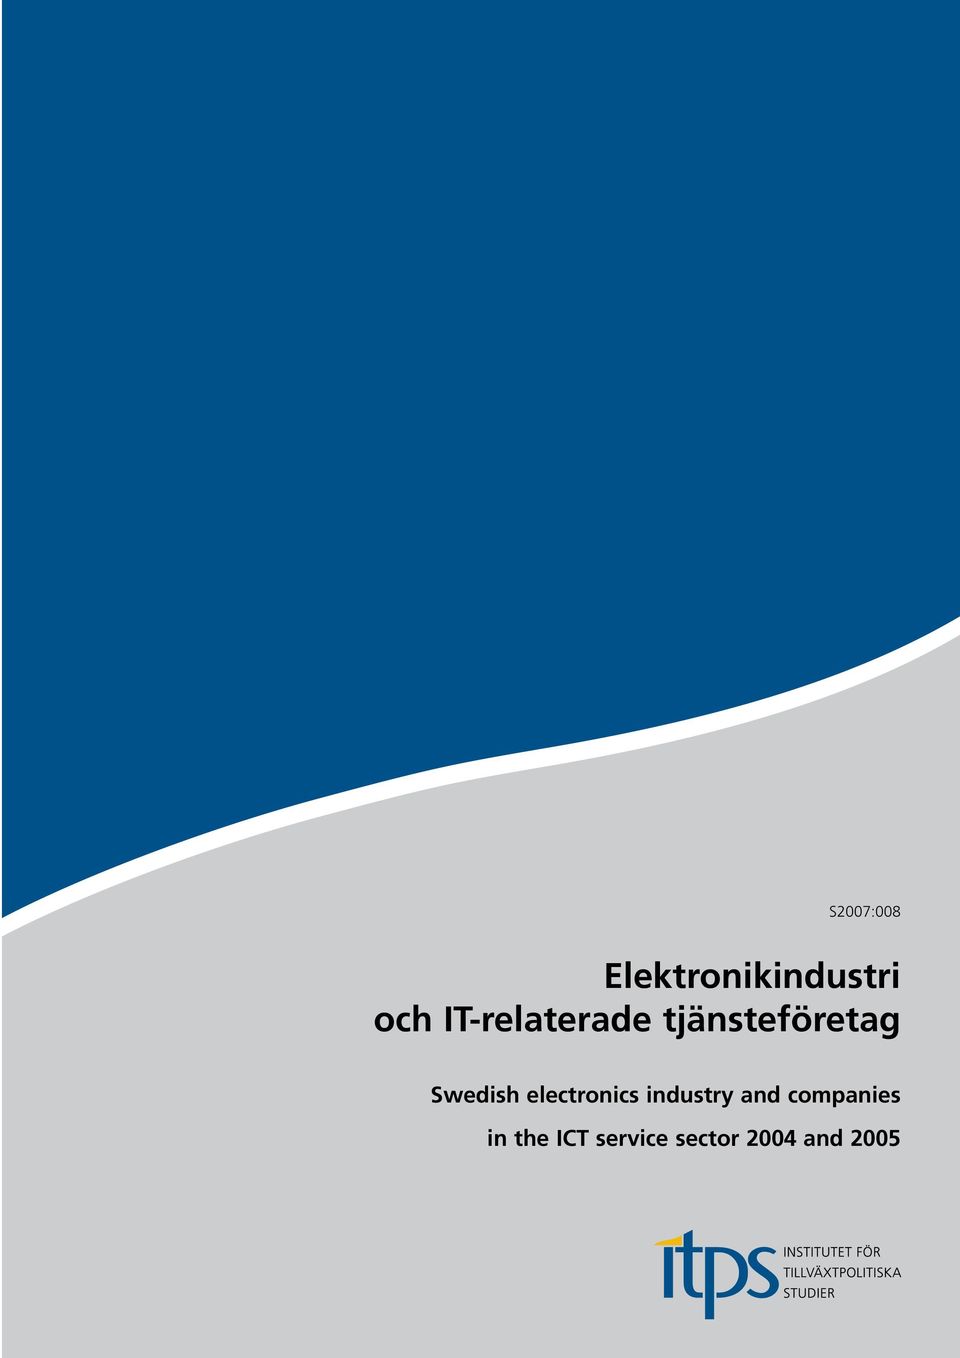 Swedish electronics industry and